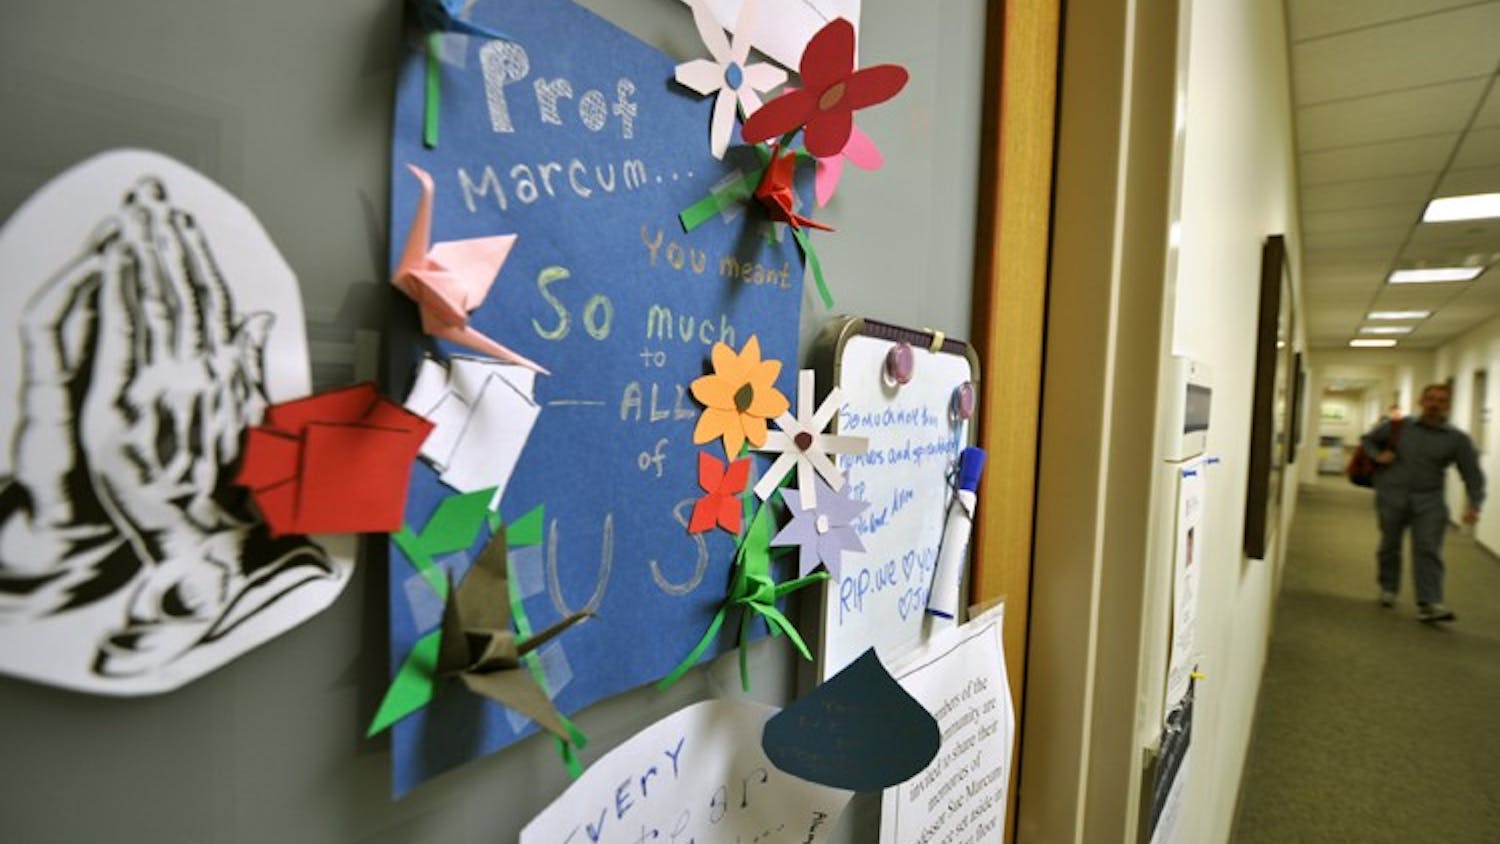 Notes are left on the door of the late Professor Sue Marcum.